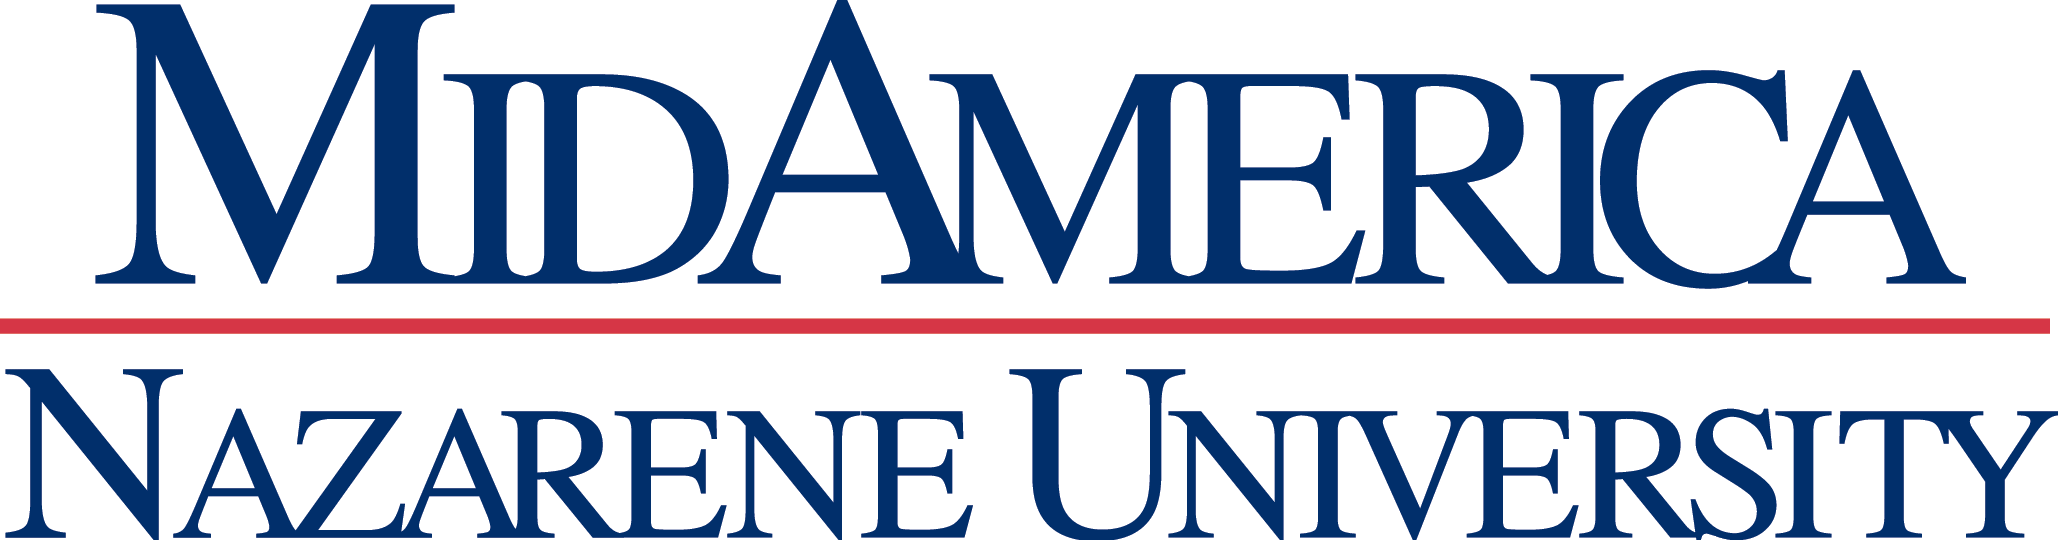 MidAmerica_Nazarene_University_(logo).png